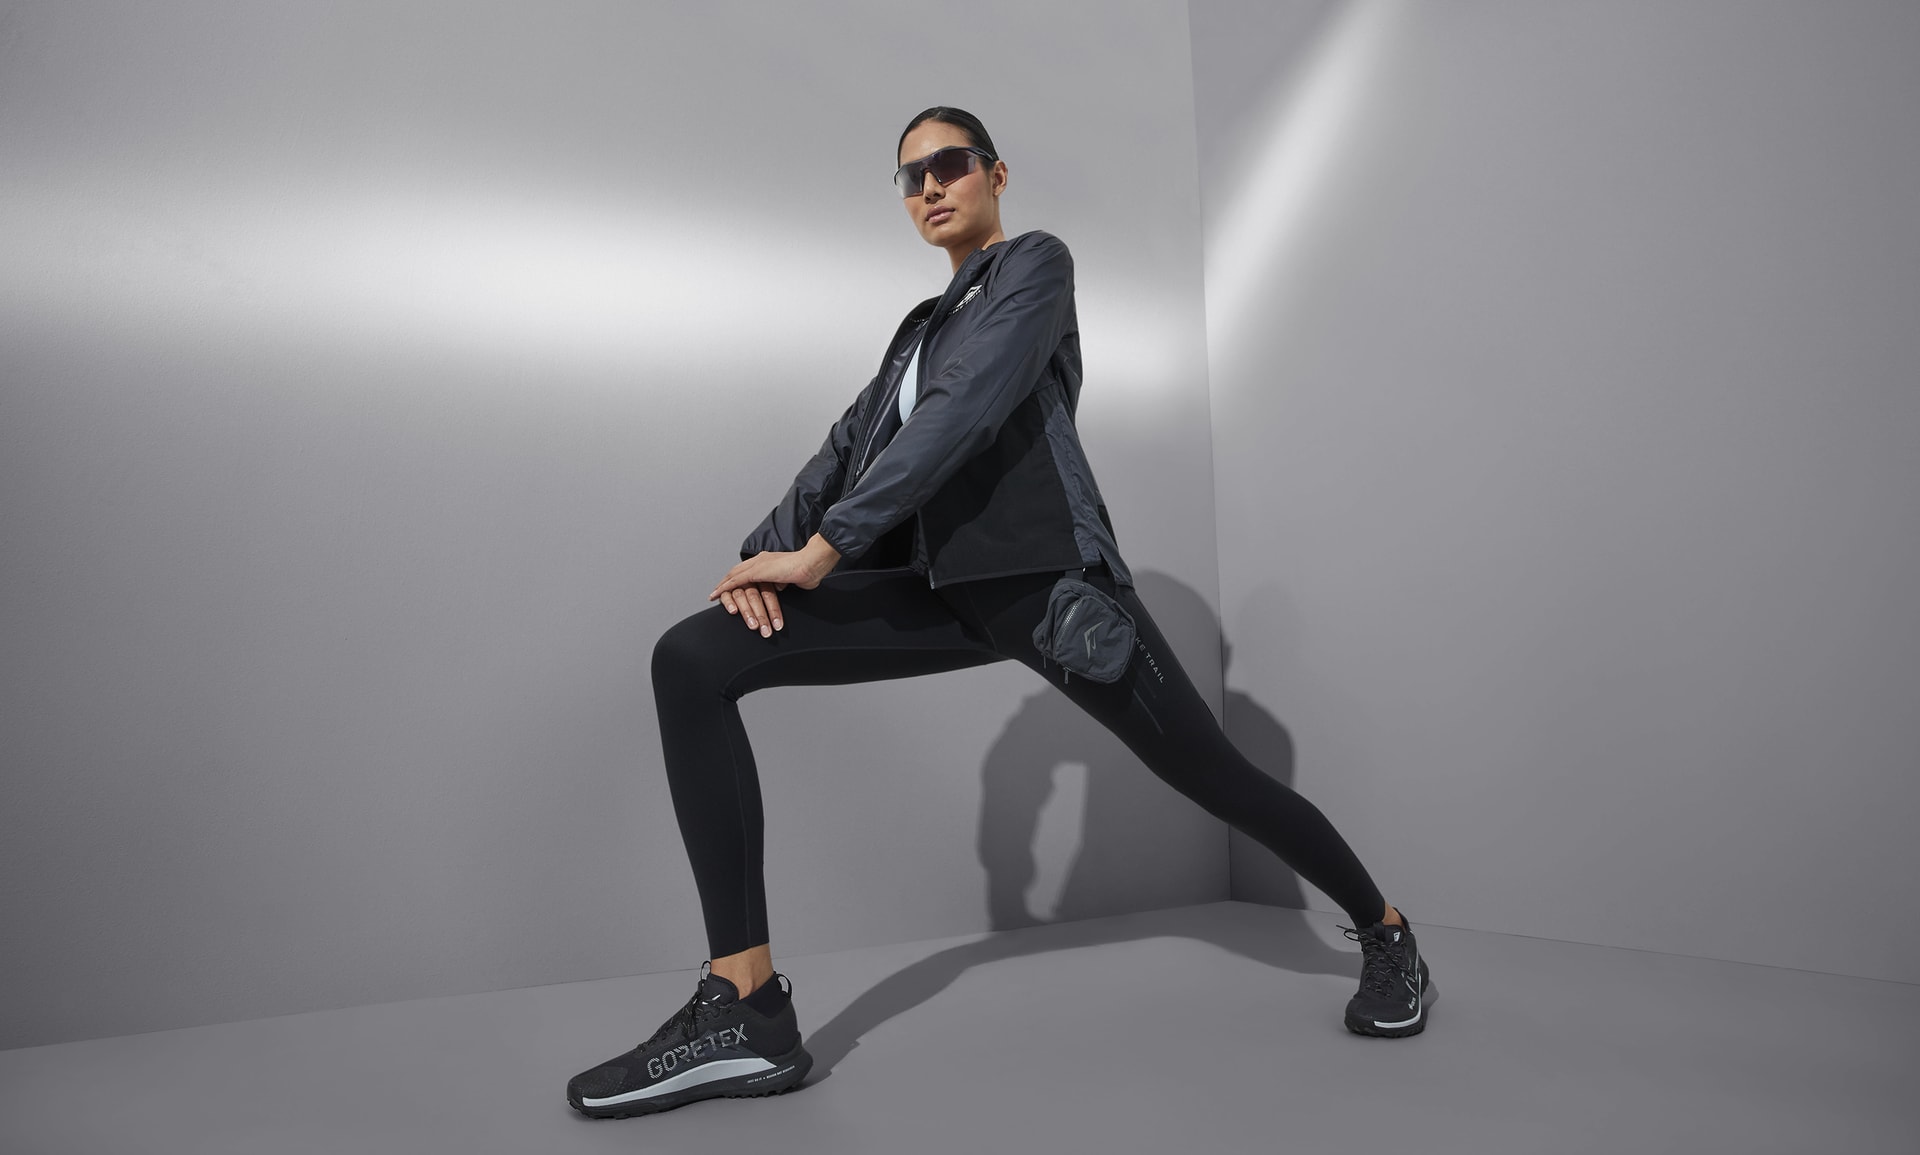 Nike Go Leggings With Pockets - XL Black - $60 (45% Off Retail